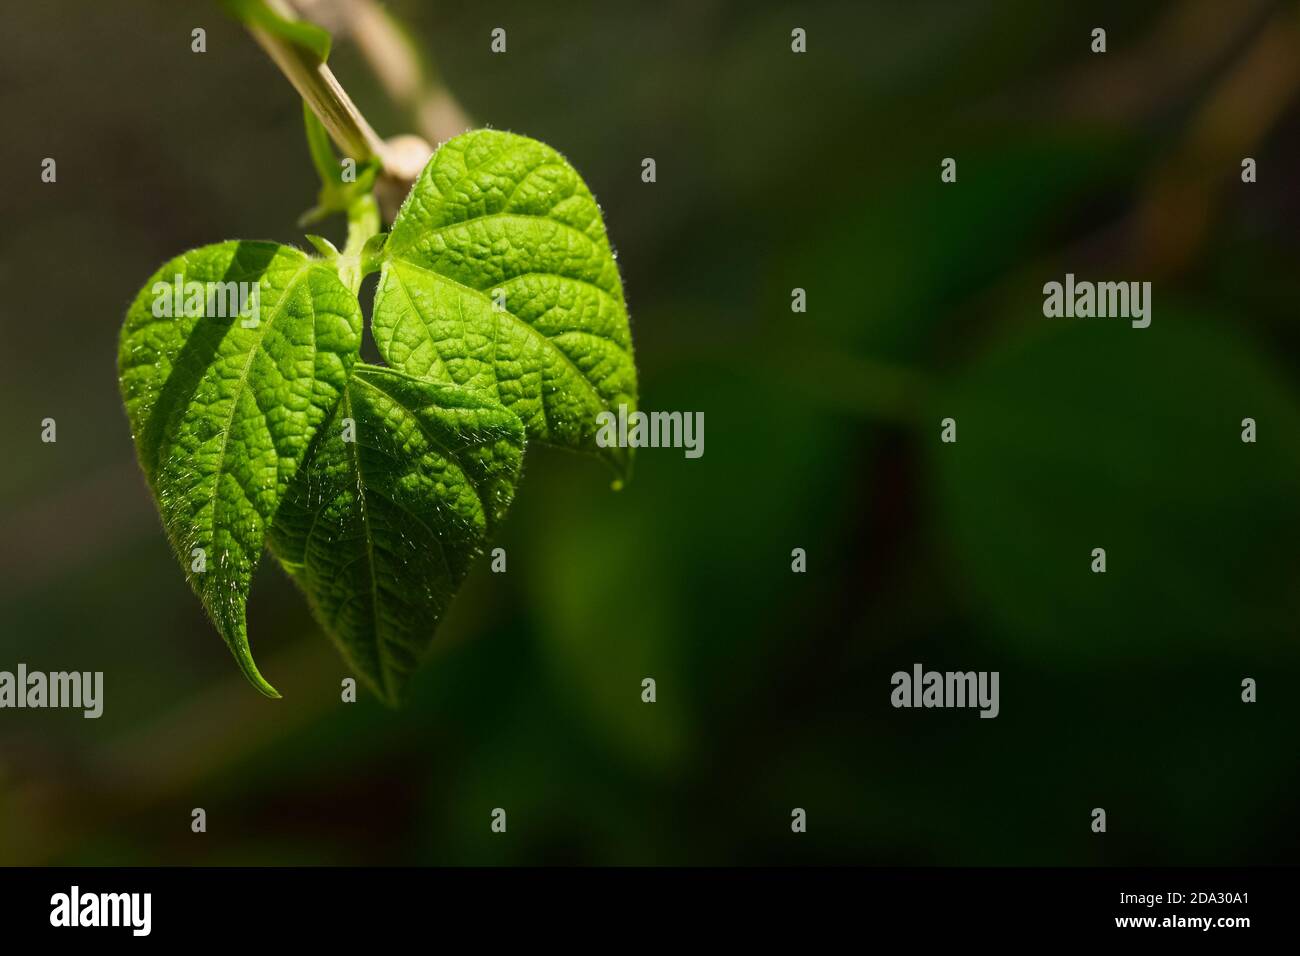 Pole bean leaf on blurred background Stock Photo